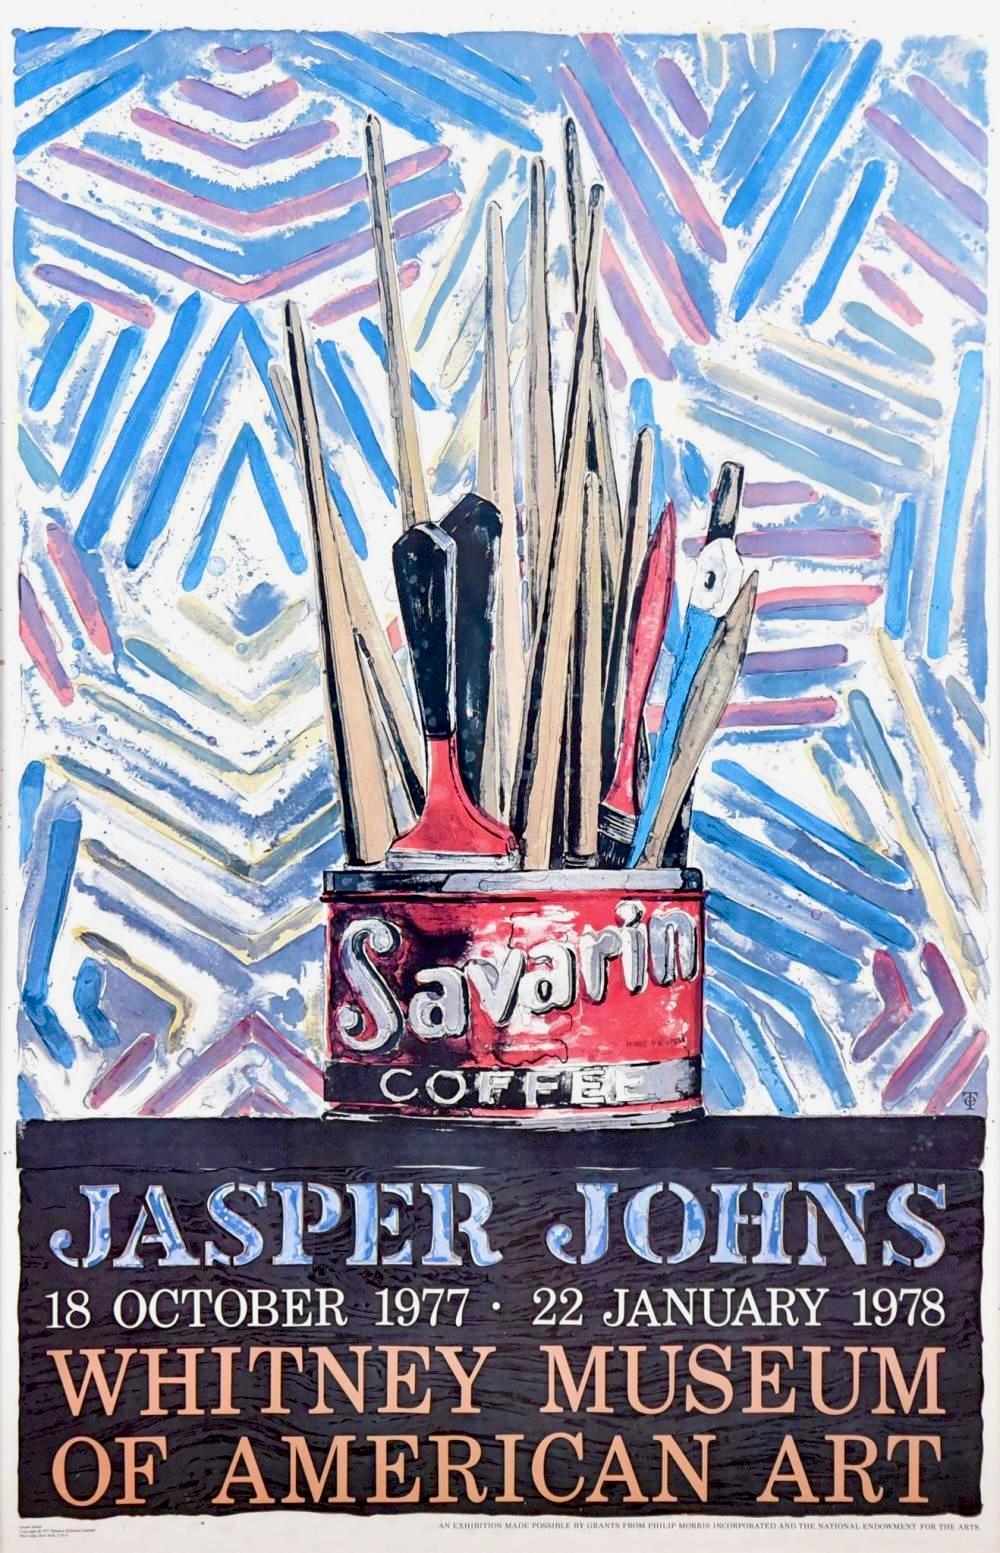 Johns, Savarin, Whitney Museum of American Art (d'après)